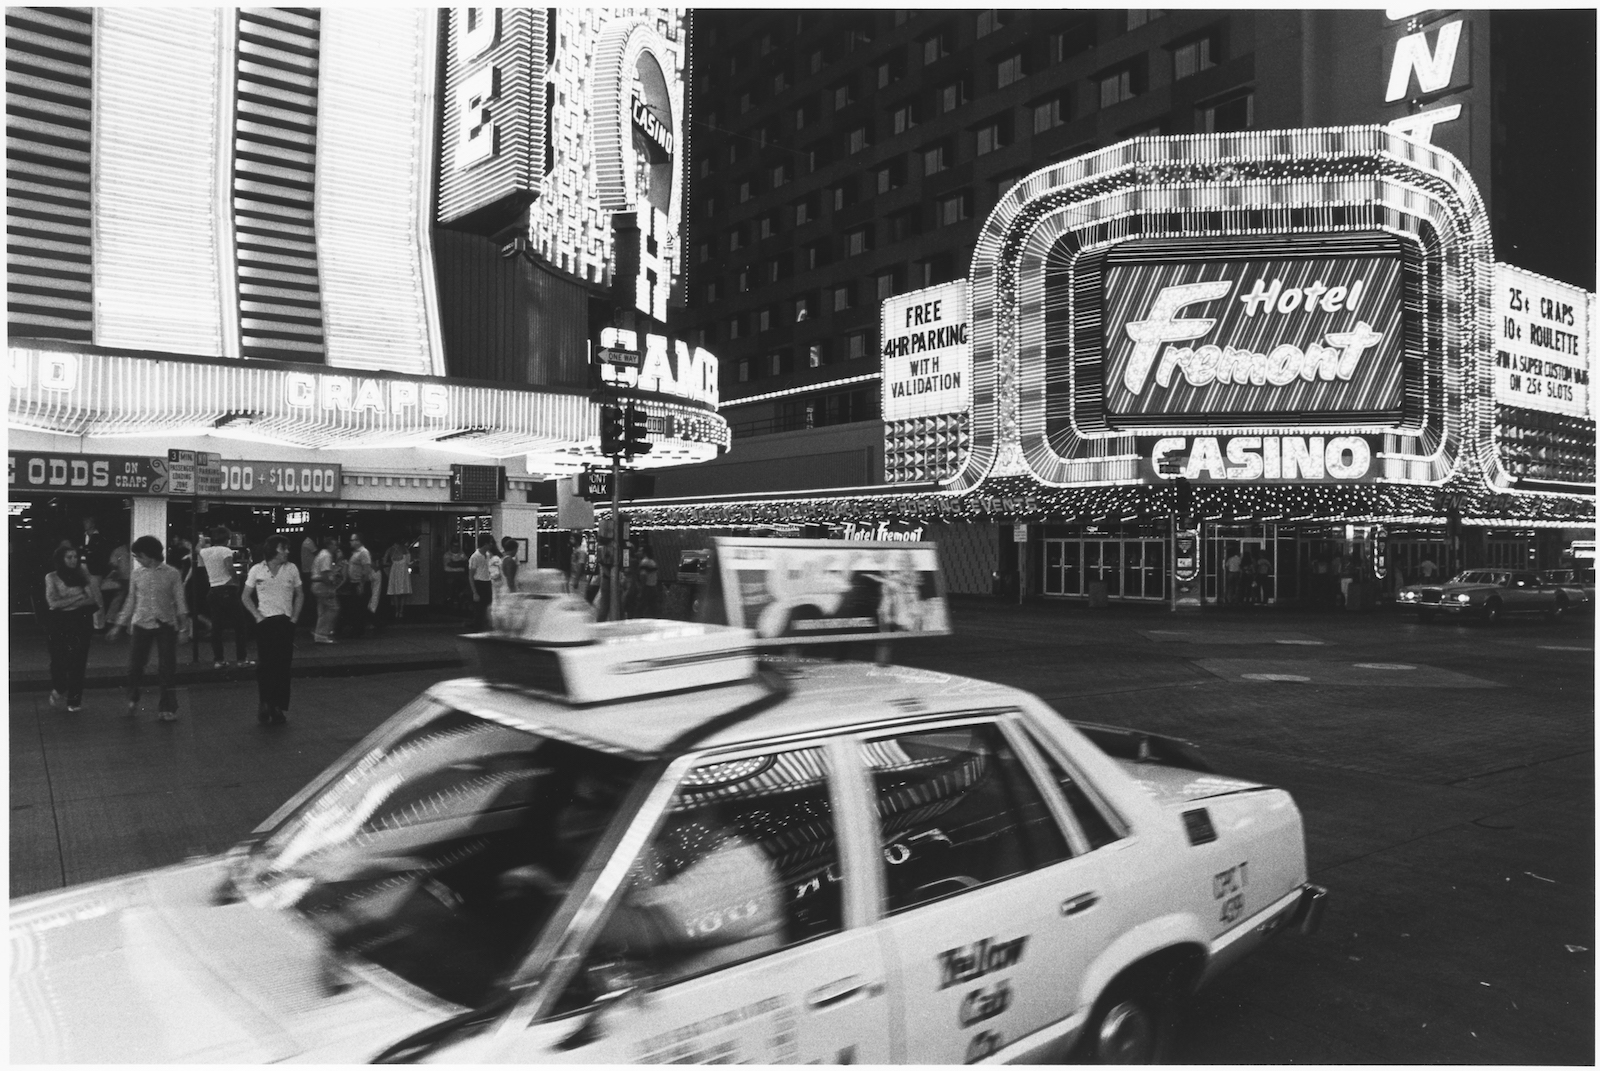 Las Vegas at night, 1981